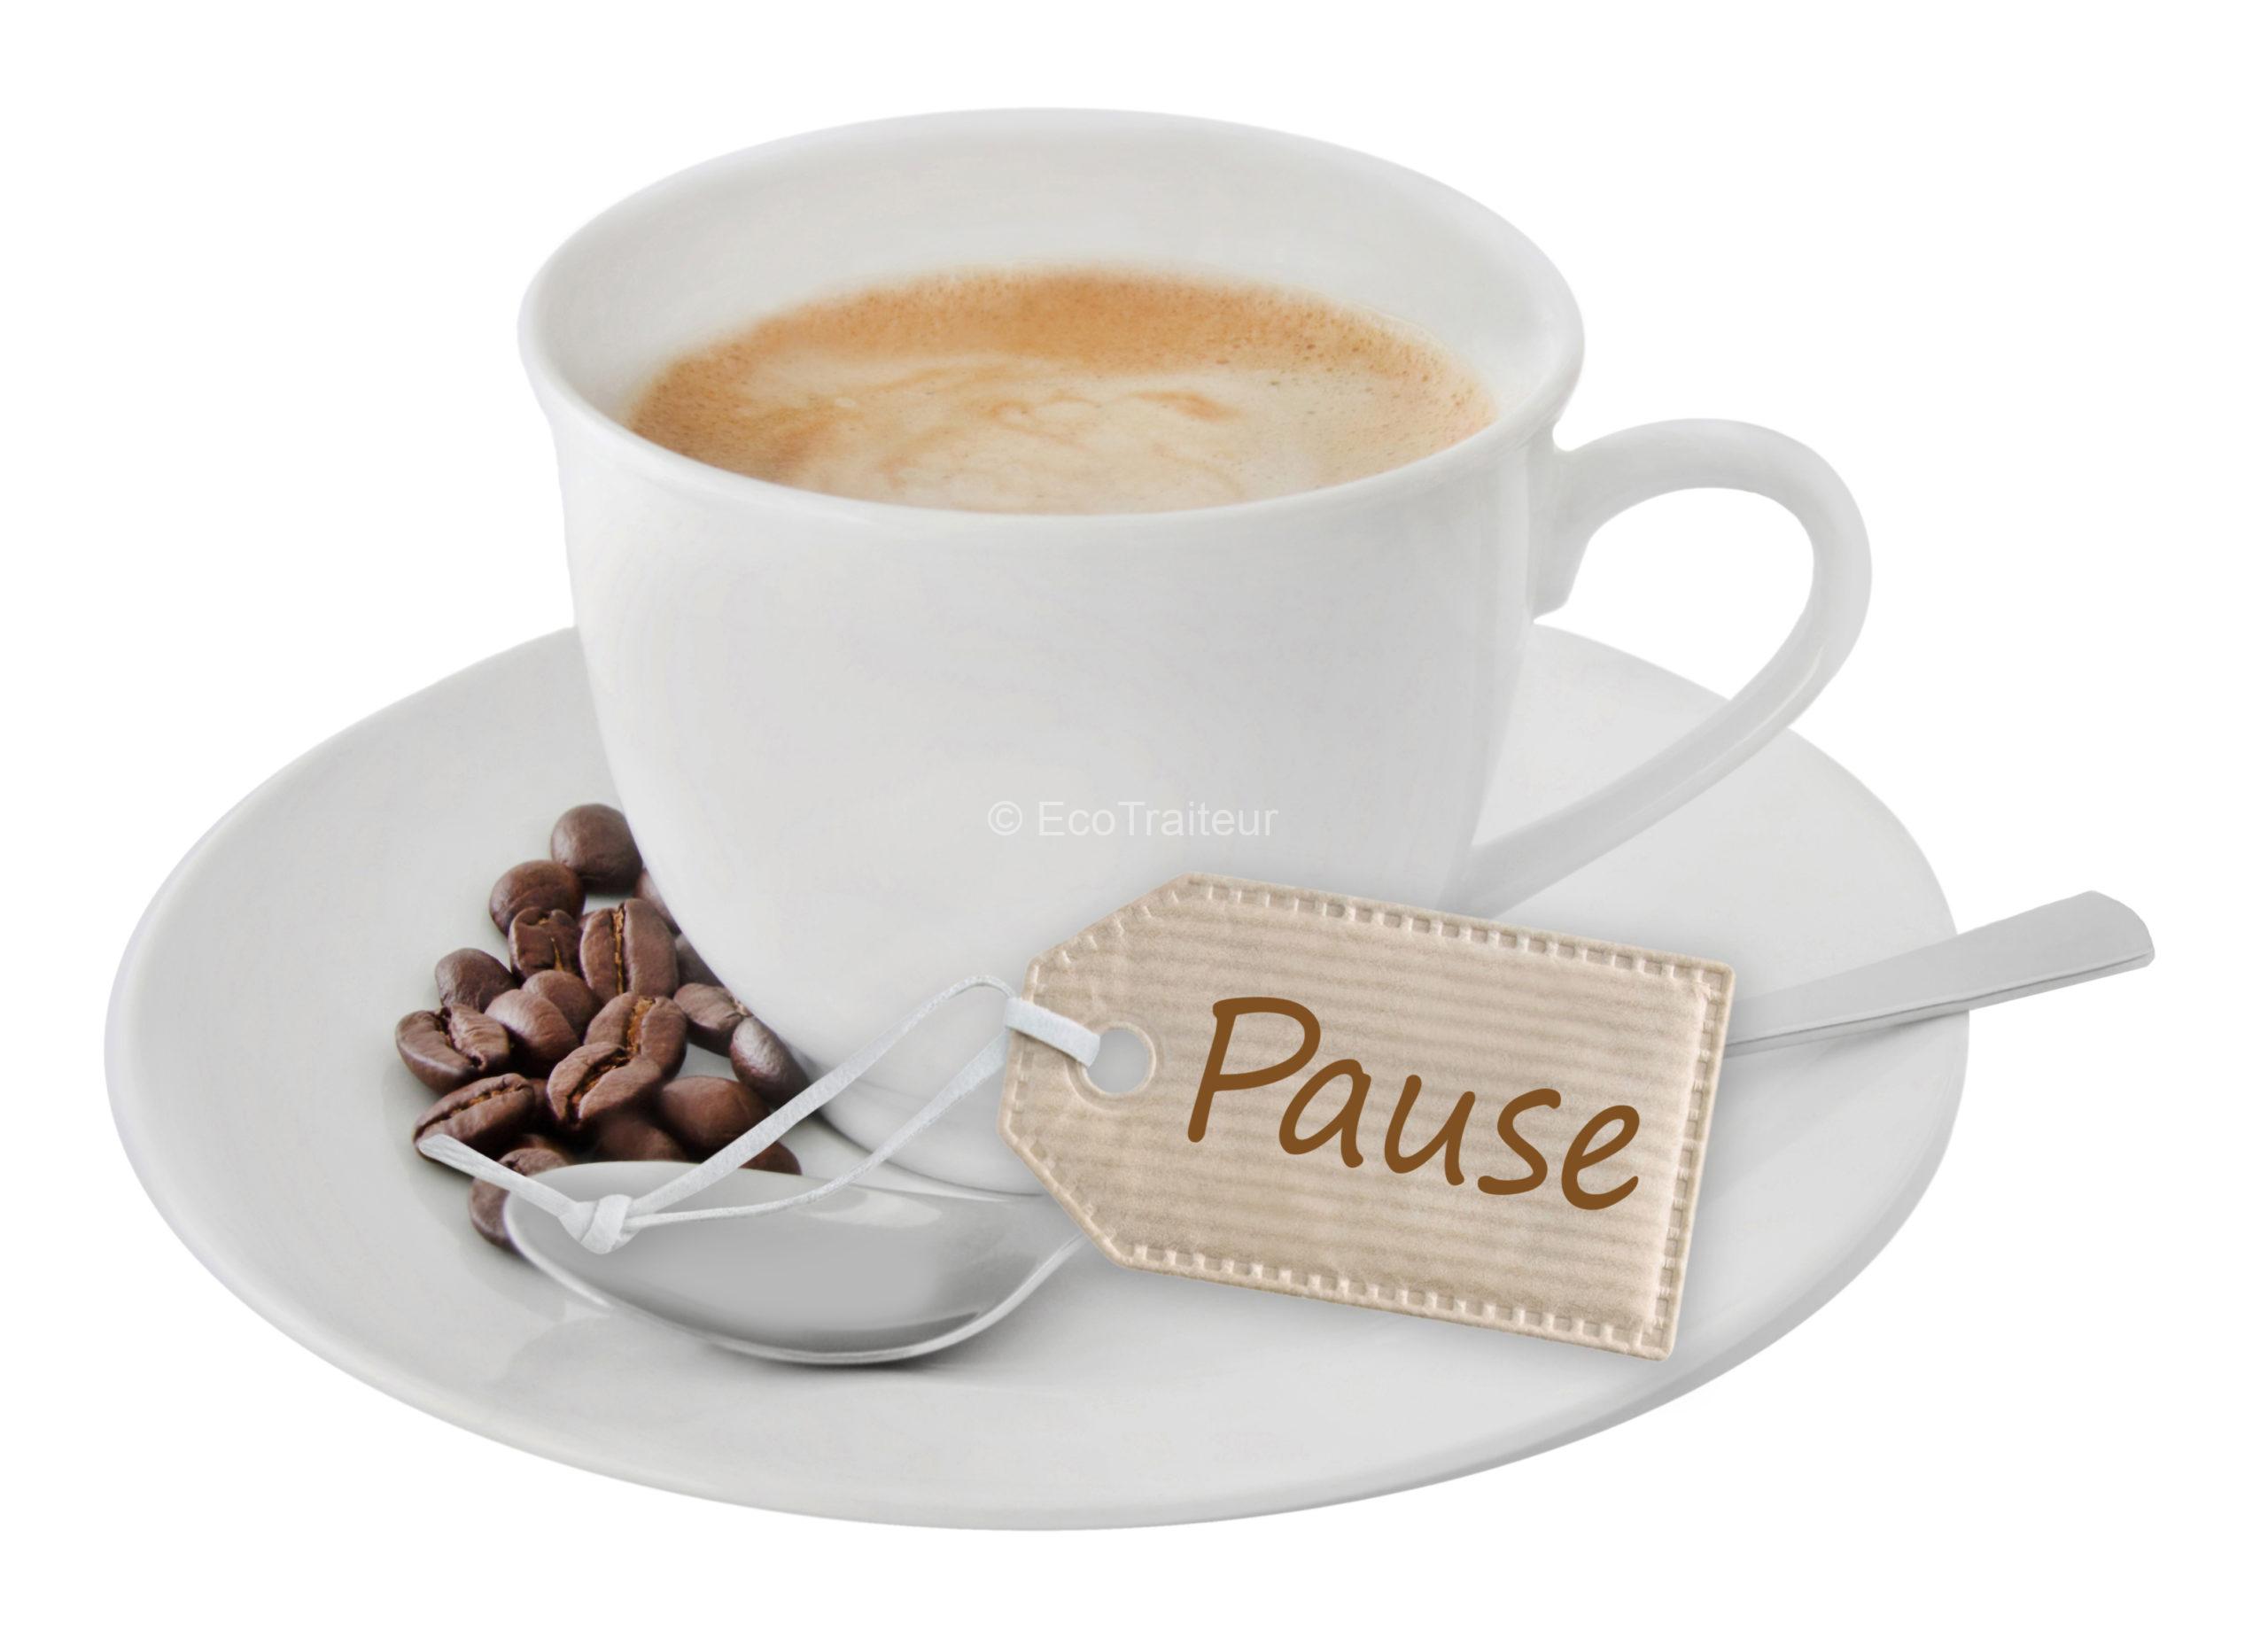 Pause-Café - améthyste